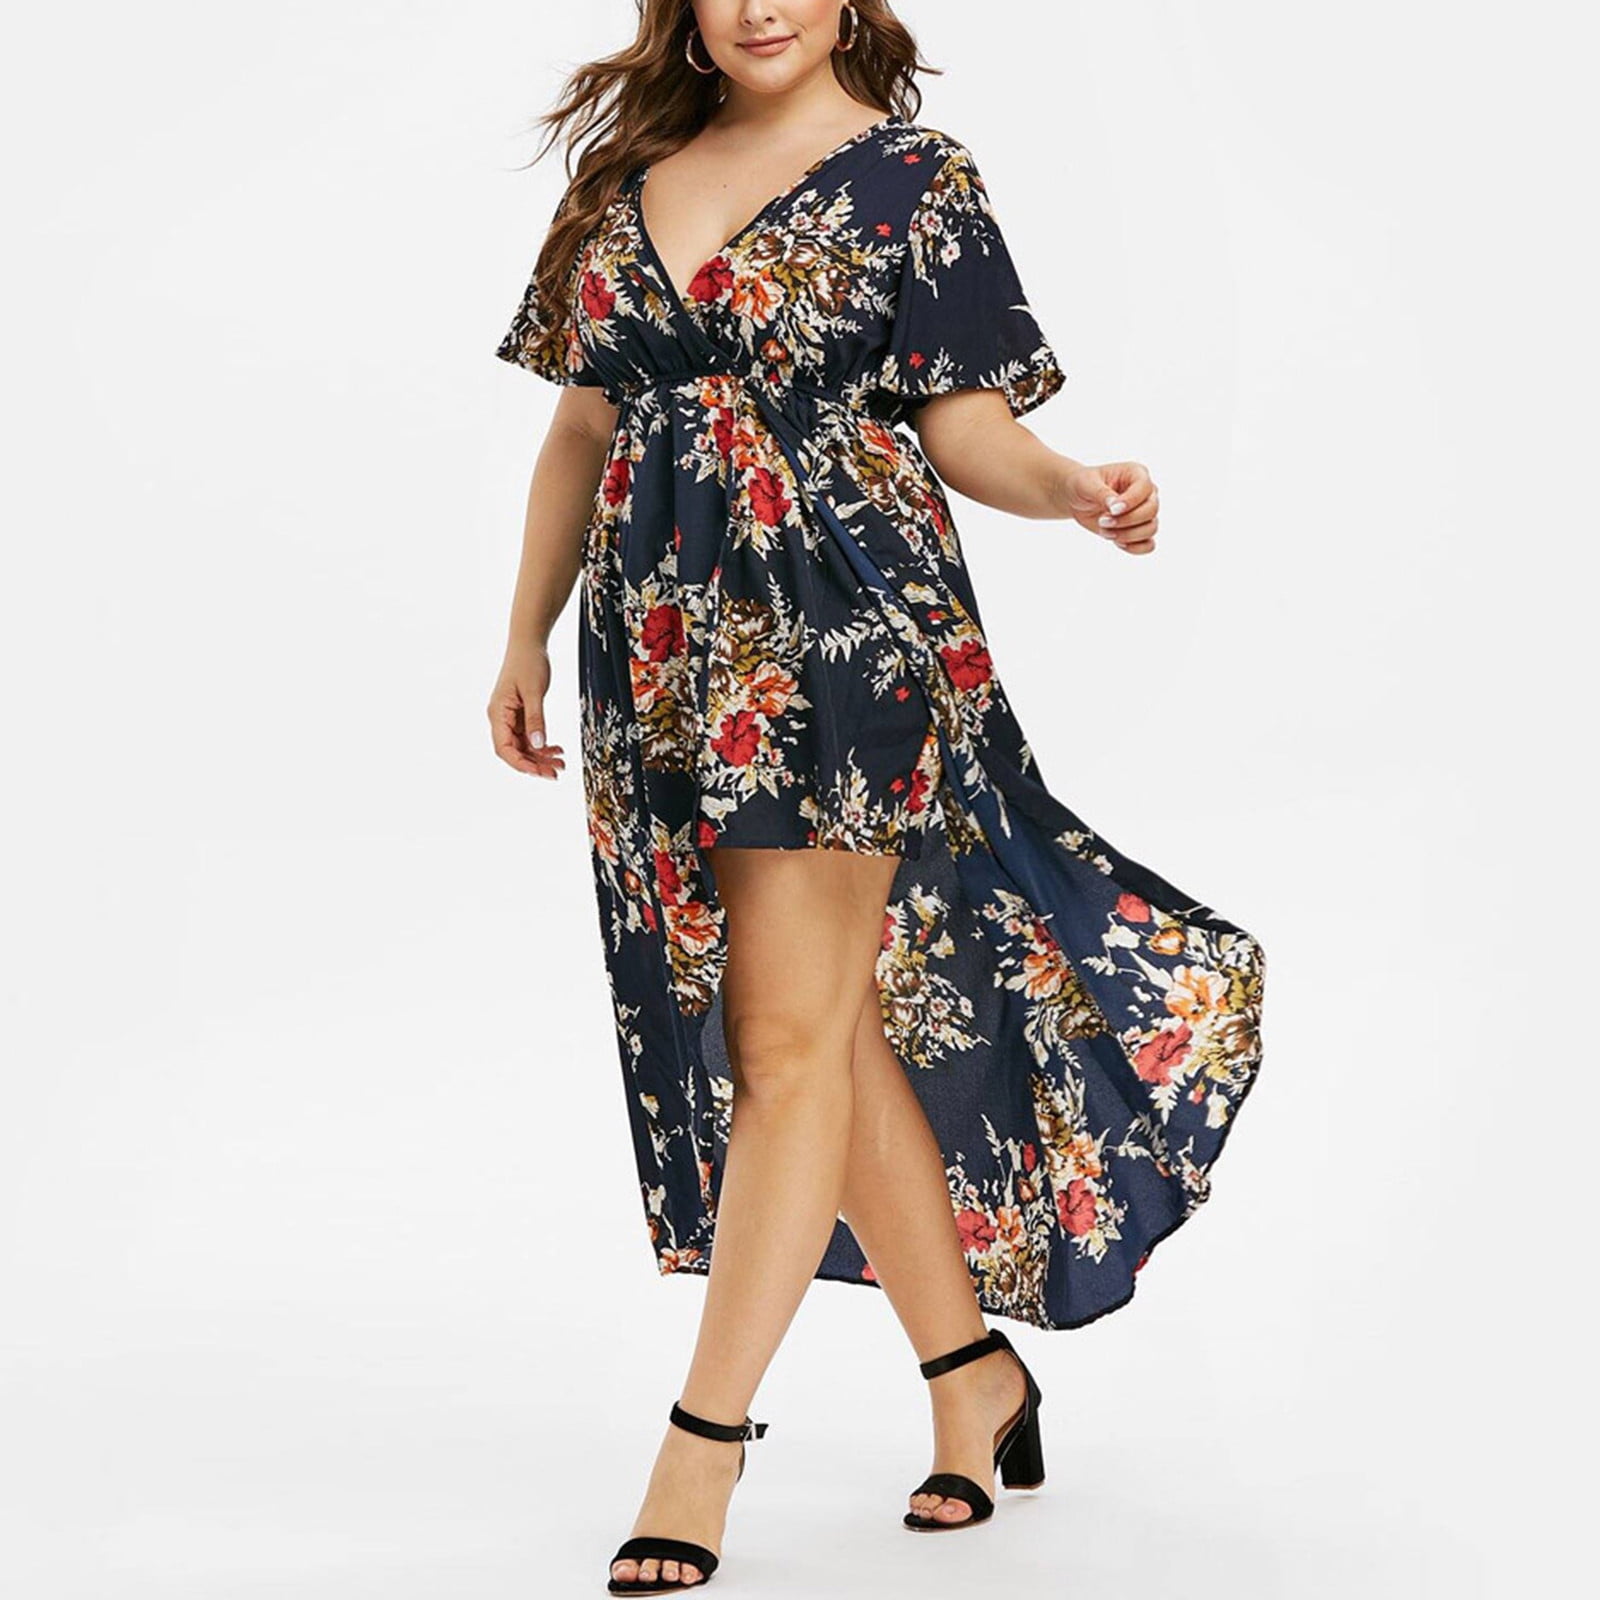 Lenago Plus Size Summer Dresses for Women 2022 Boho Flower Print High Low Dress V-Neck Short Dresses for Party Casual Clearance - Walmart.com